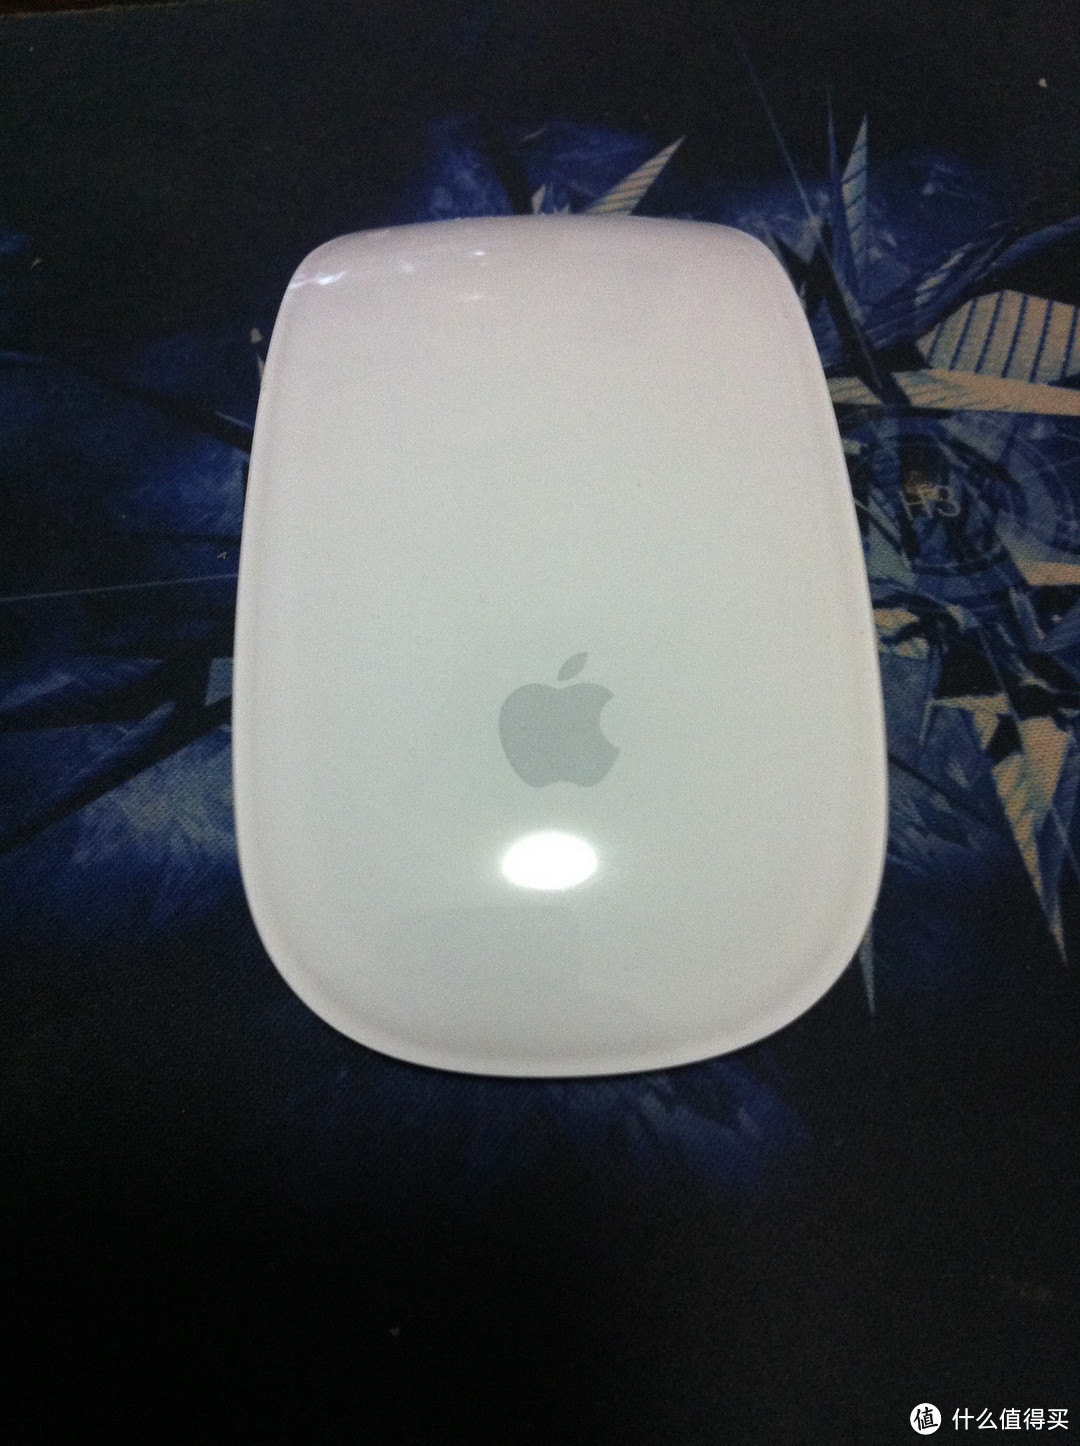 新时代文艺青年范——Apple magic mouse